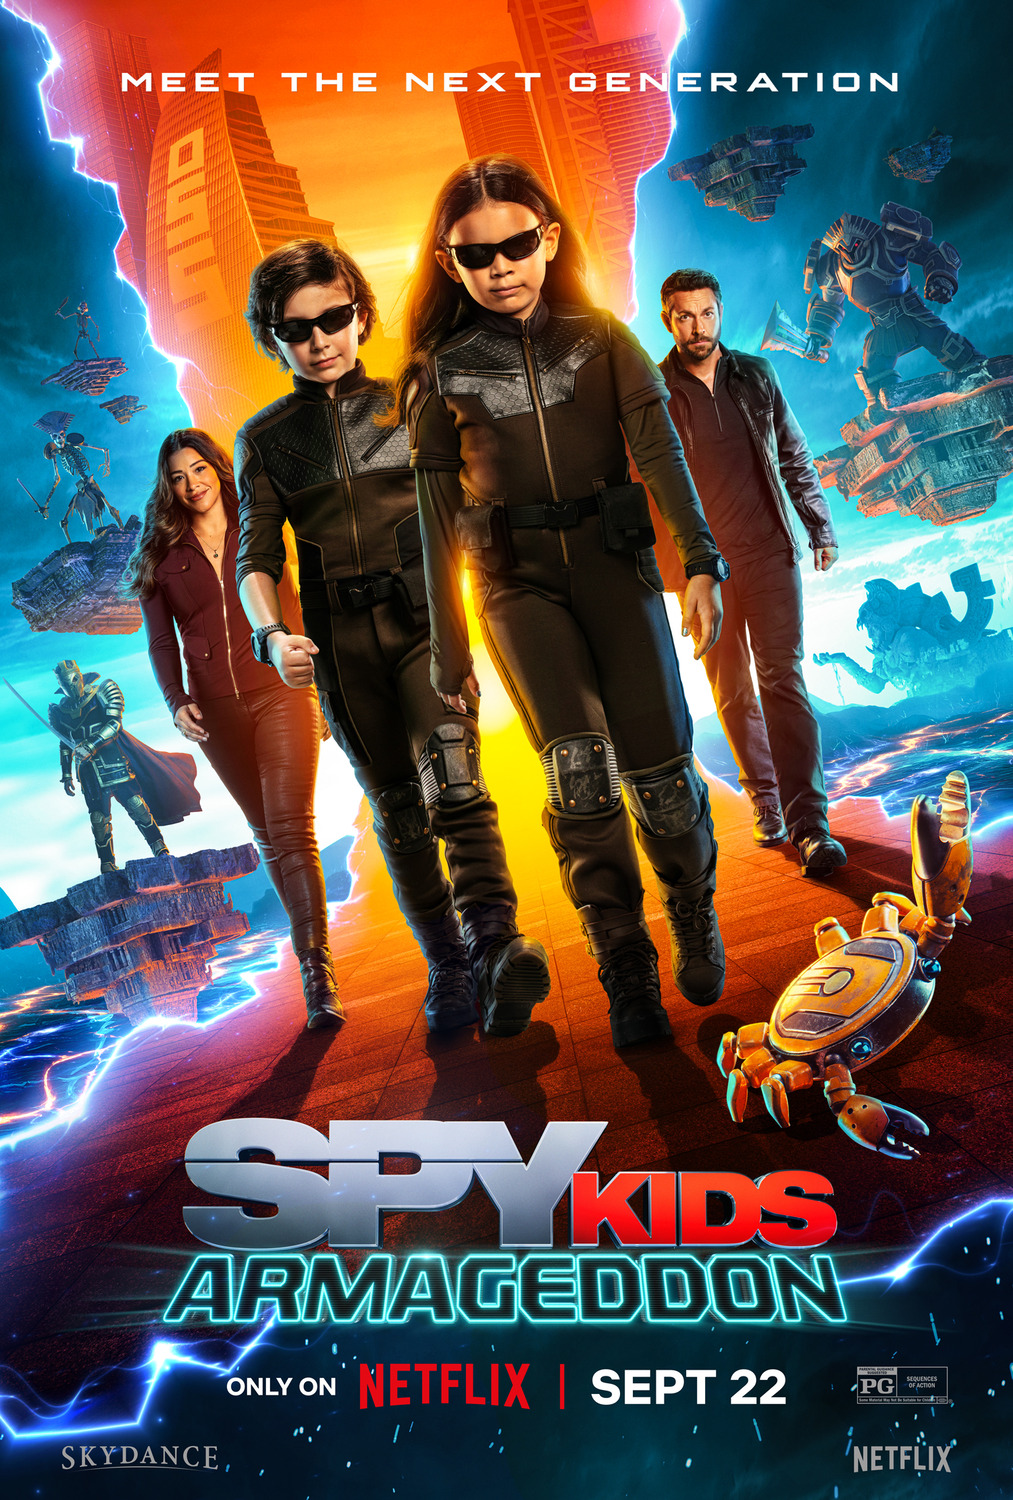 Extra Large Movie Poster Image for Spy Kids: Armageddon 